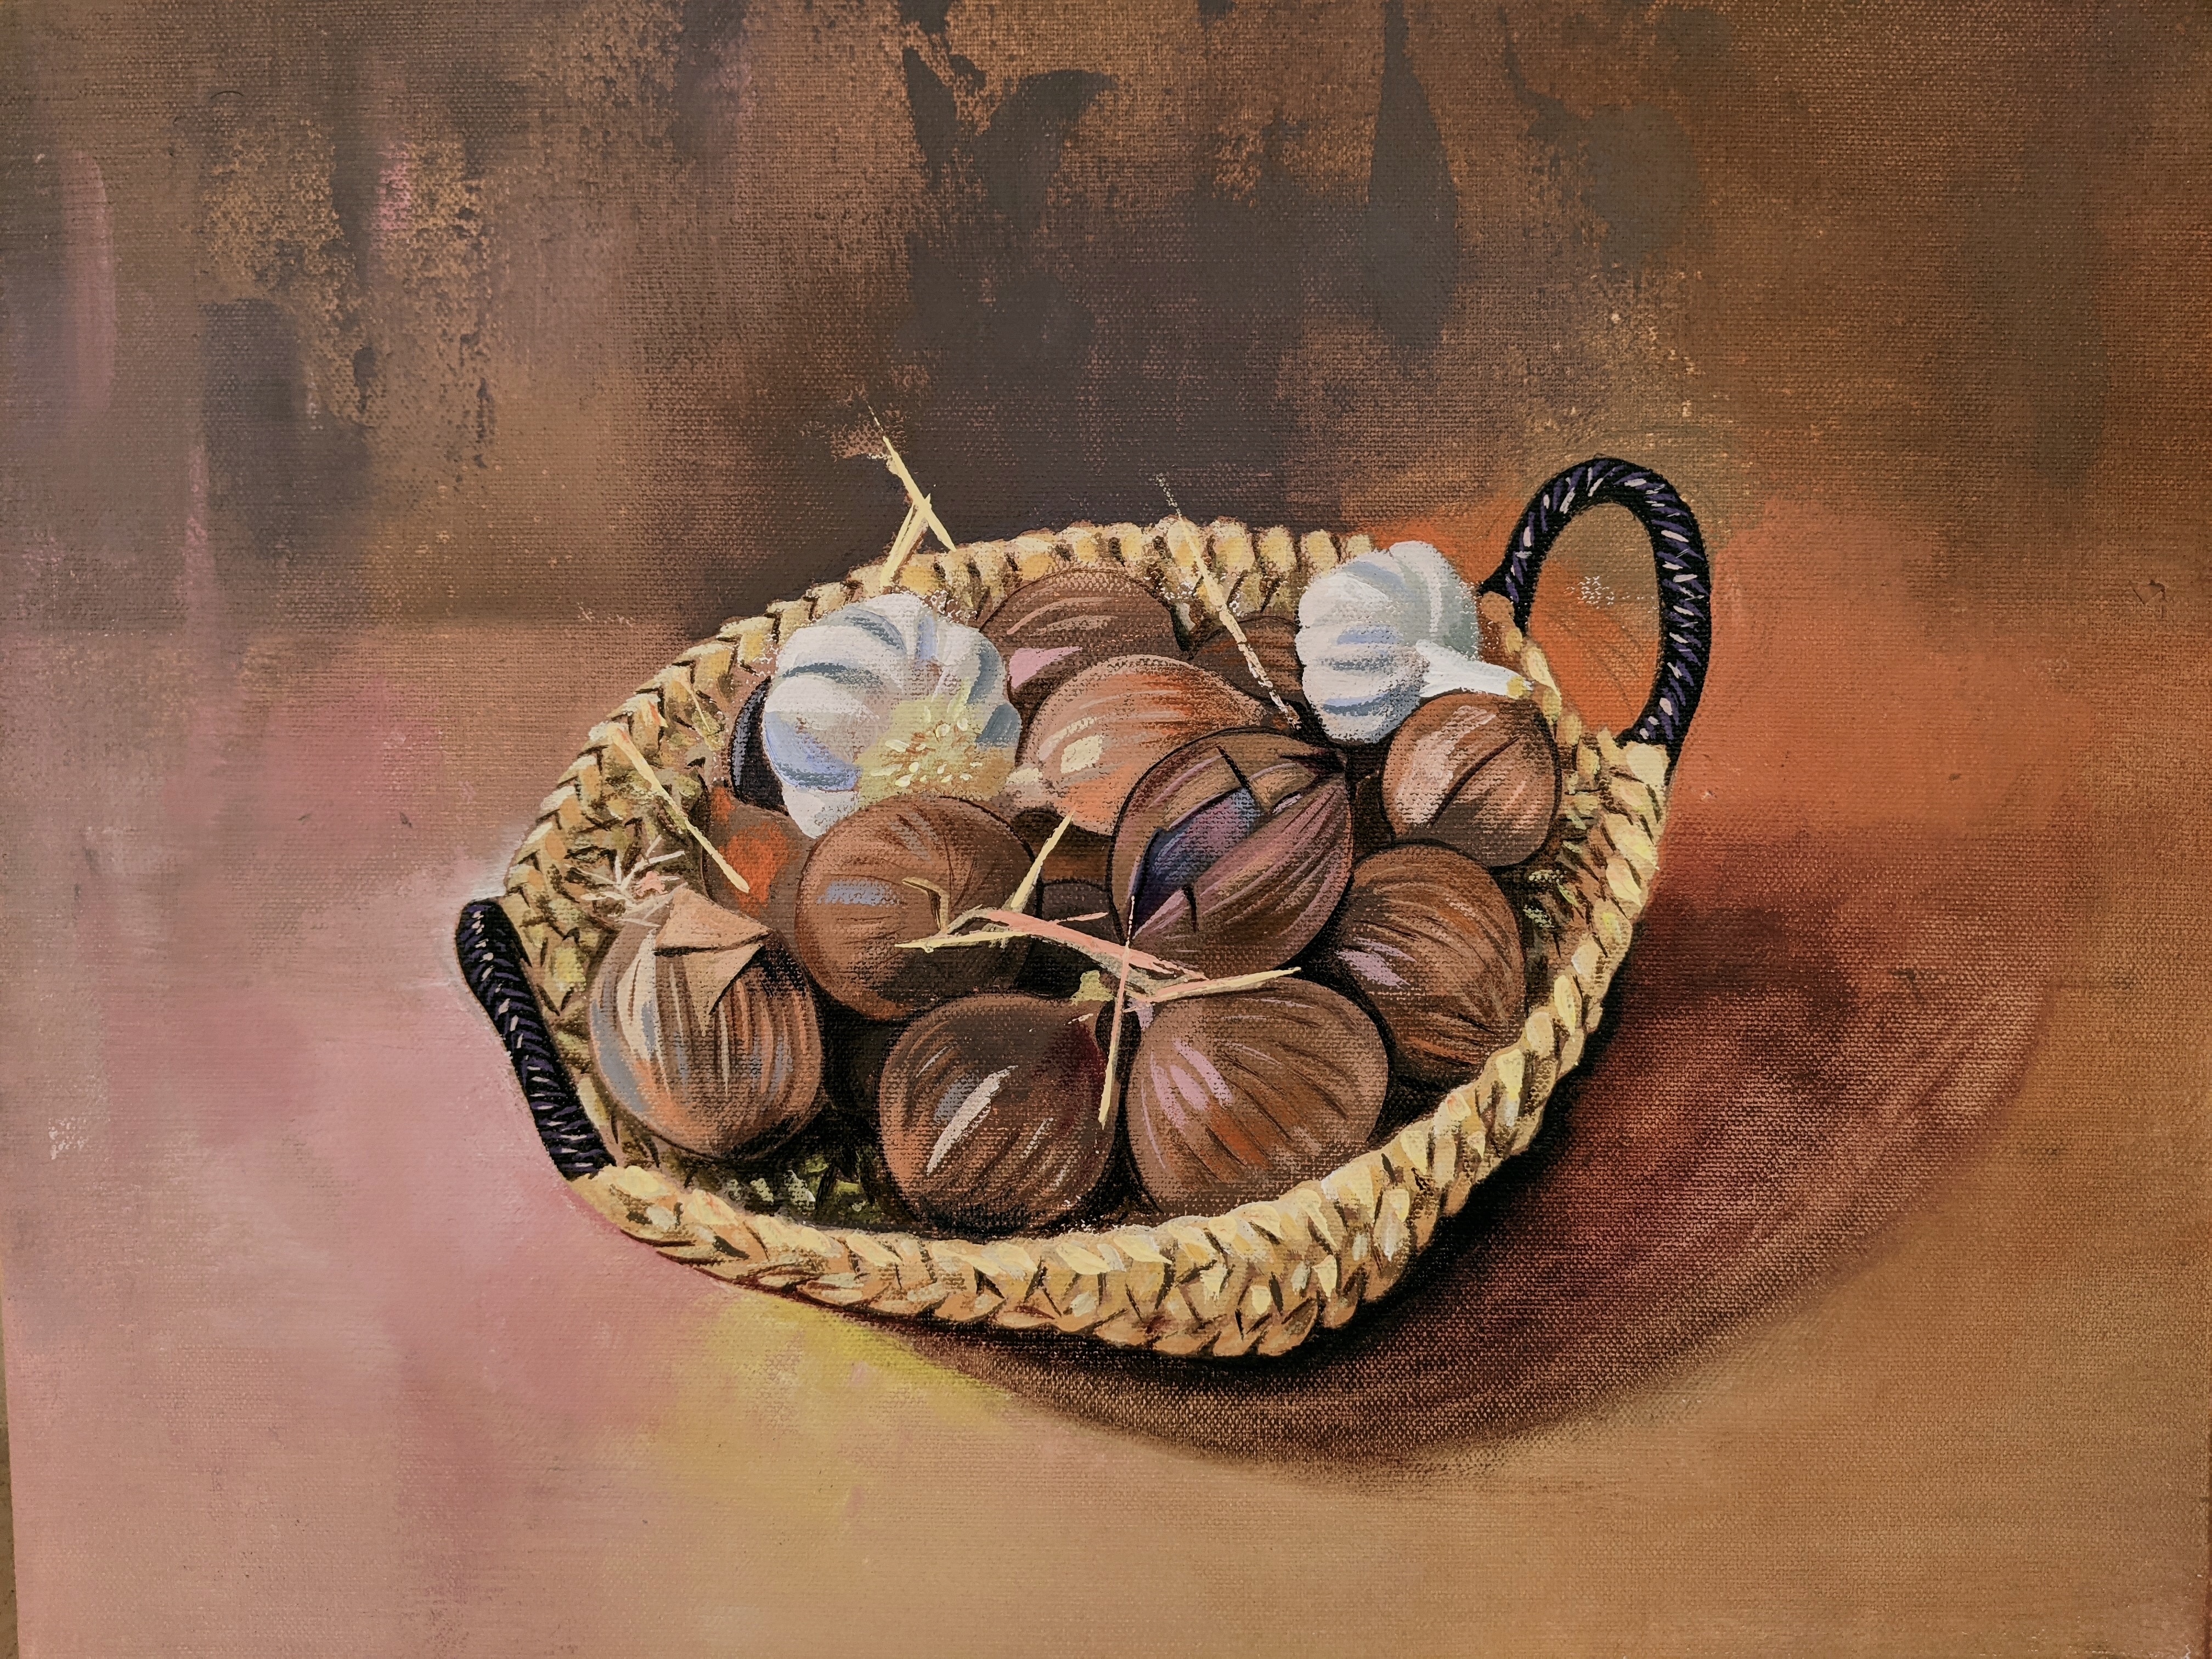 Onions &garlics
Acrylics on canvas 
50*40